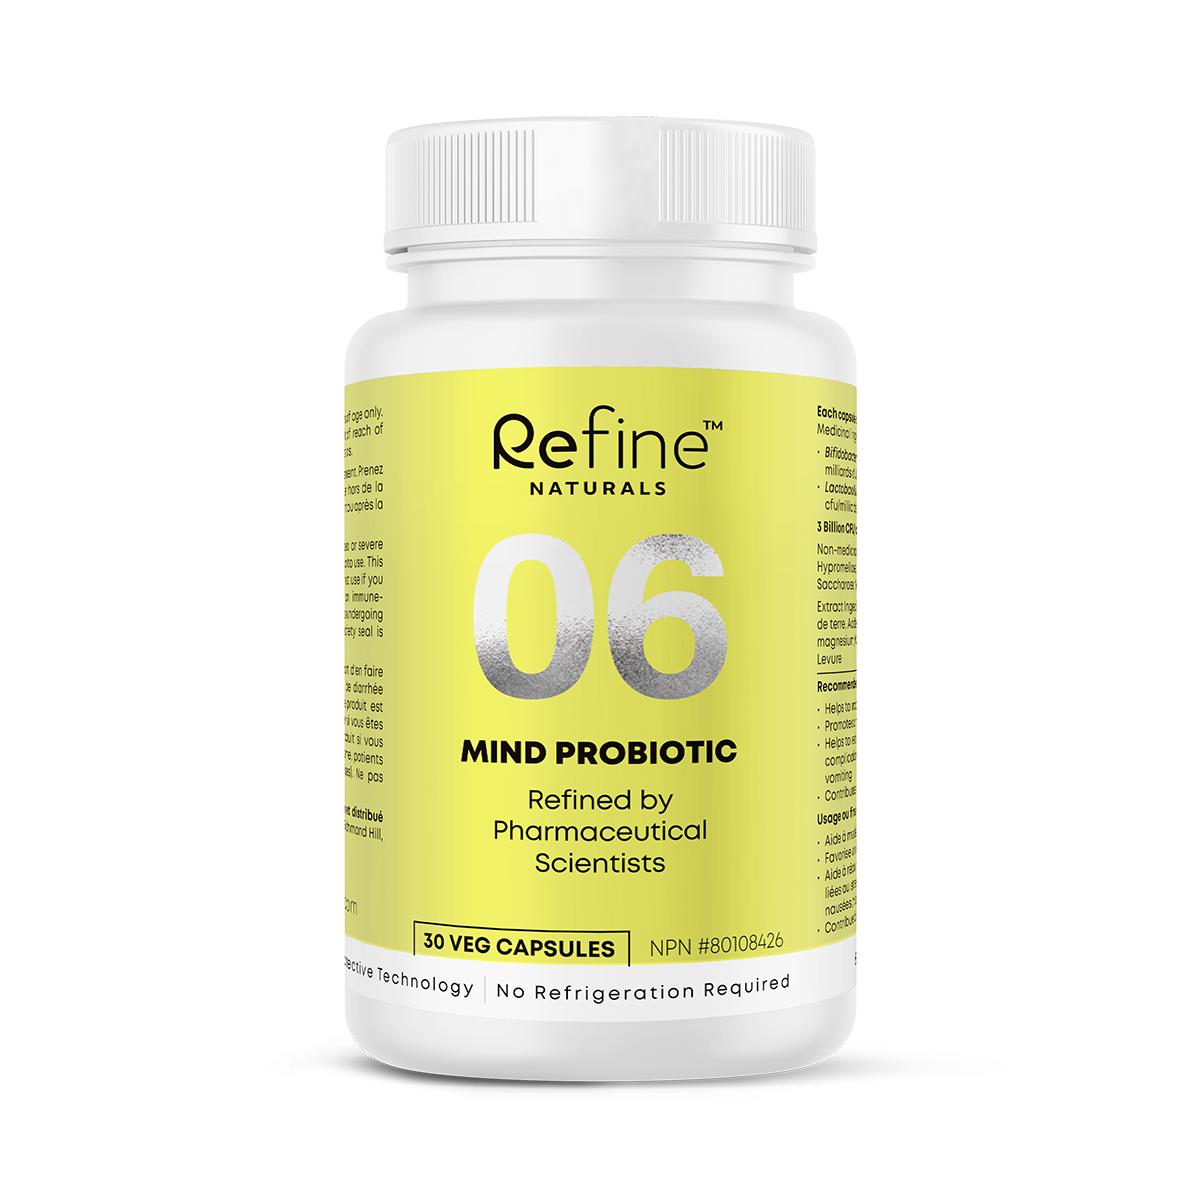 Refine Naturals™ MIND PROBIOTIC Supplement